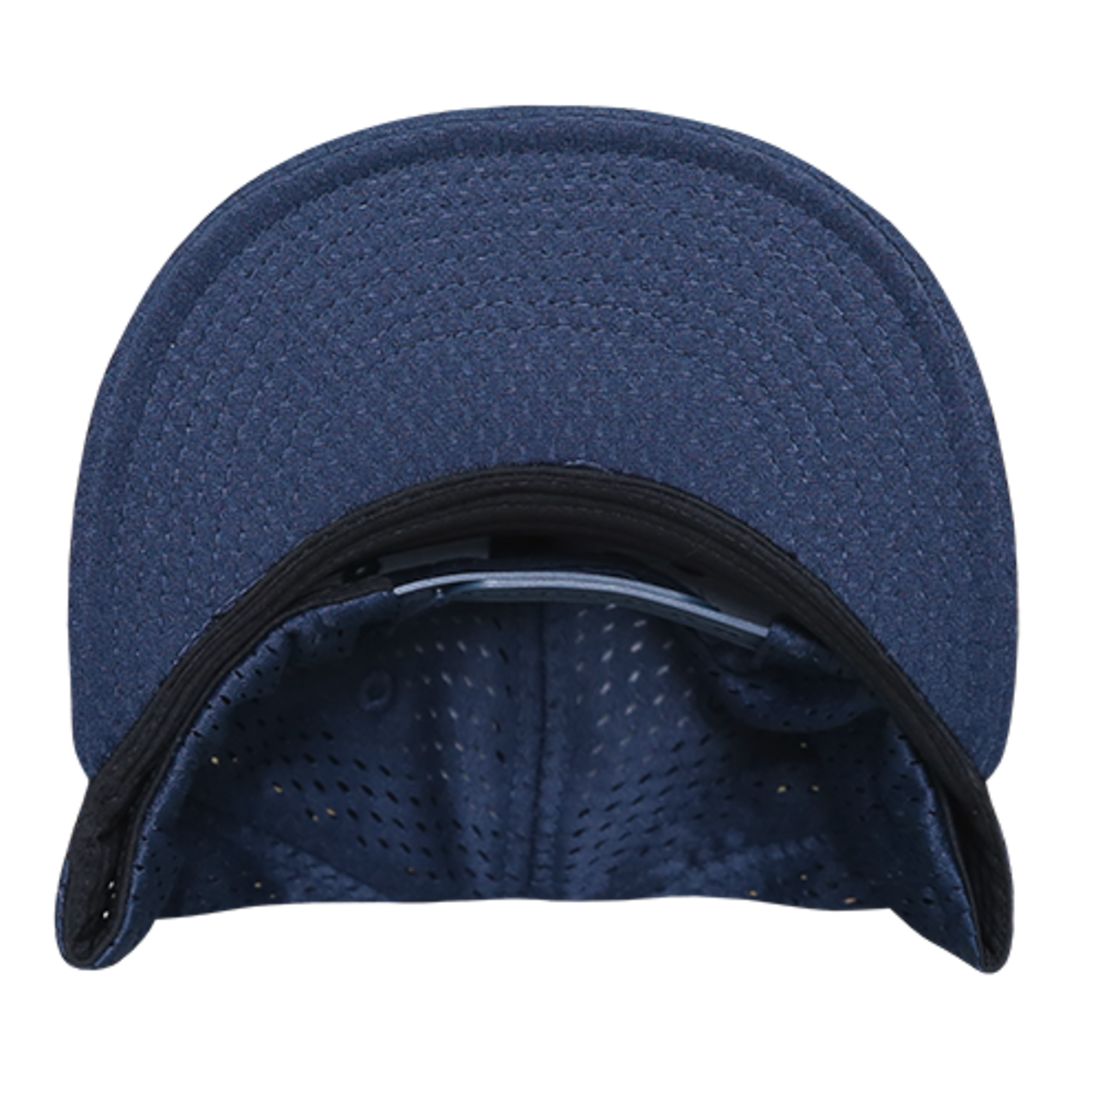 Decky 1128 High Profile Mesh Jersey Snapback Hats 6 Panel Flat Bill Caps Wholesale